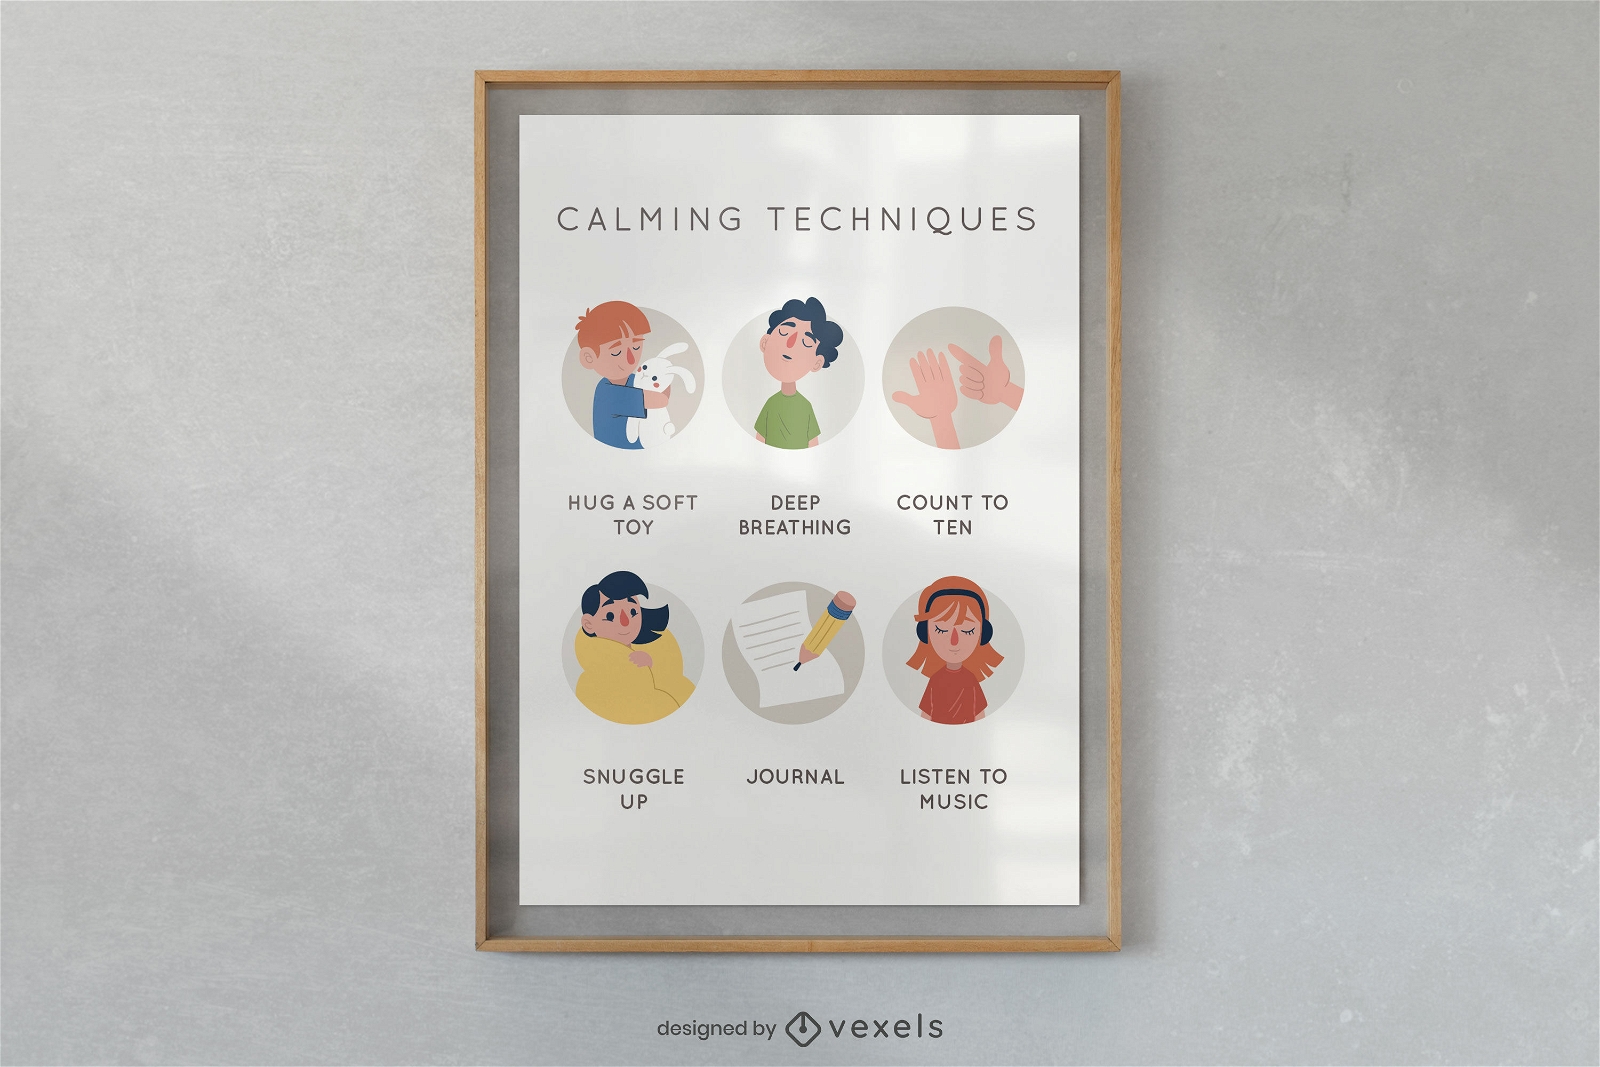 Calming techniques illustrated poster design